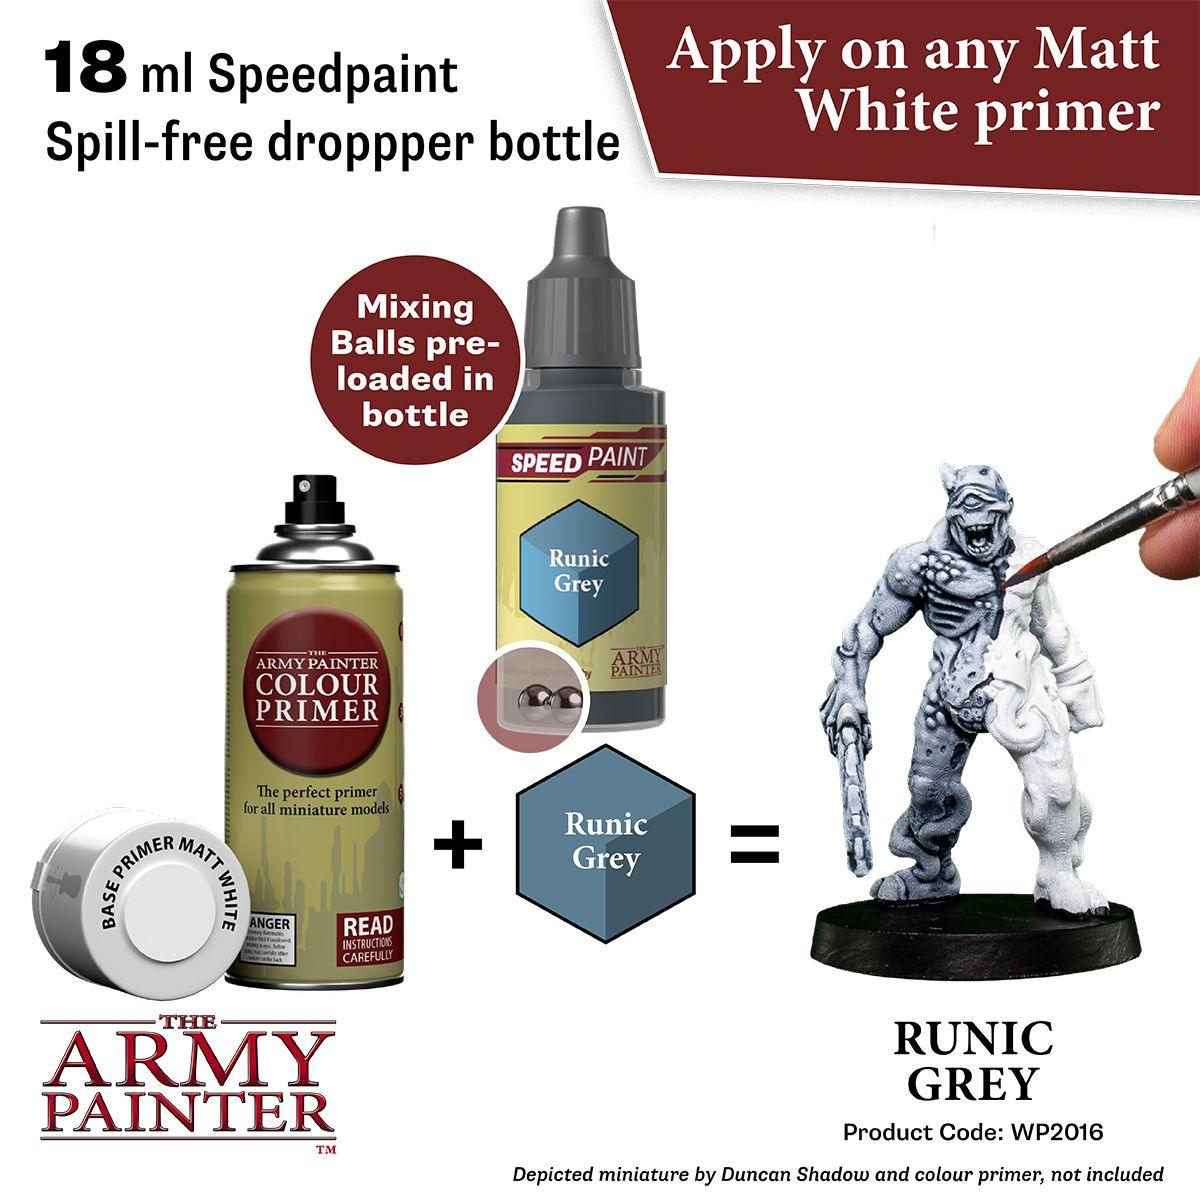 The Army Painter - Miniature Paint Sets - Model Paint Set - 18 Acrylic Paints Kit for Models, 2 Hobby Paint Brushes, Miniature Primer, Quickshade